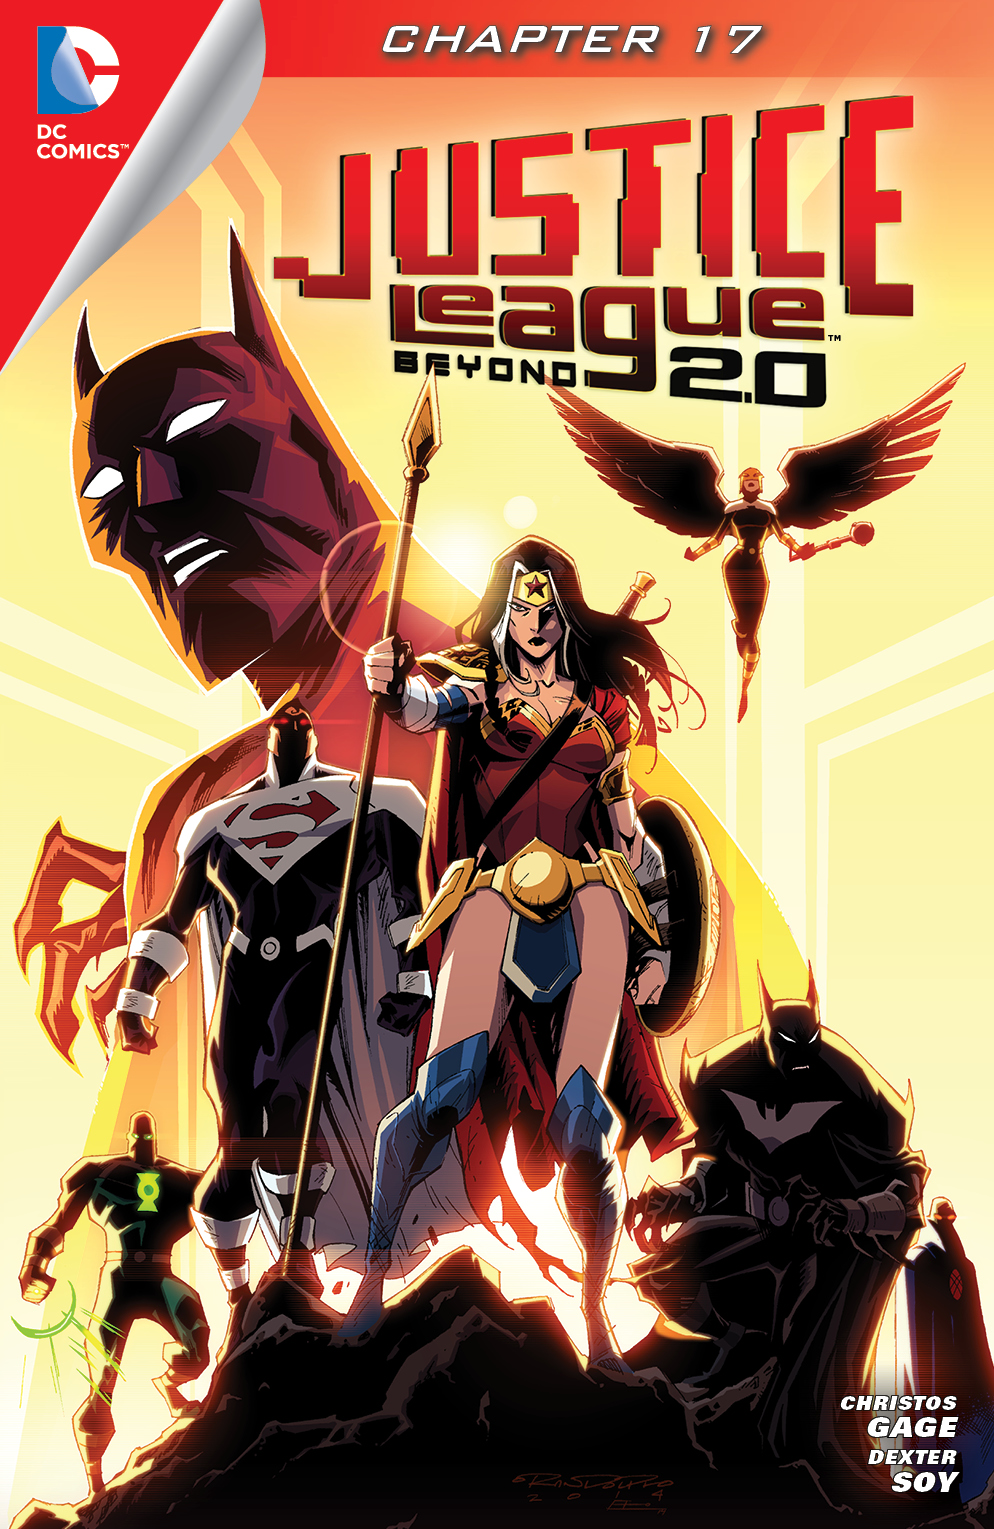 Justice League Beyond 2.0 #17 preview images